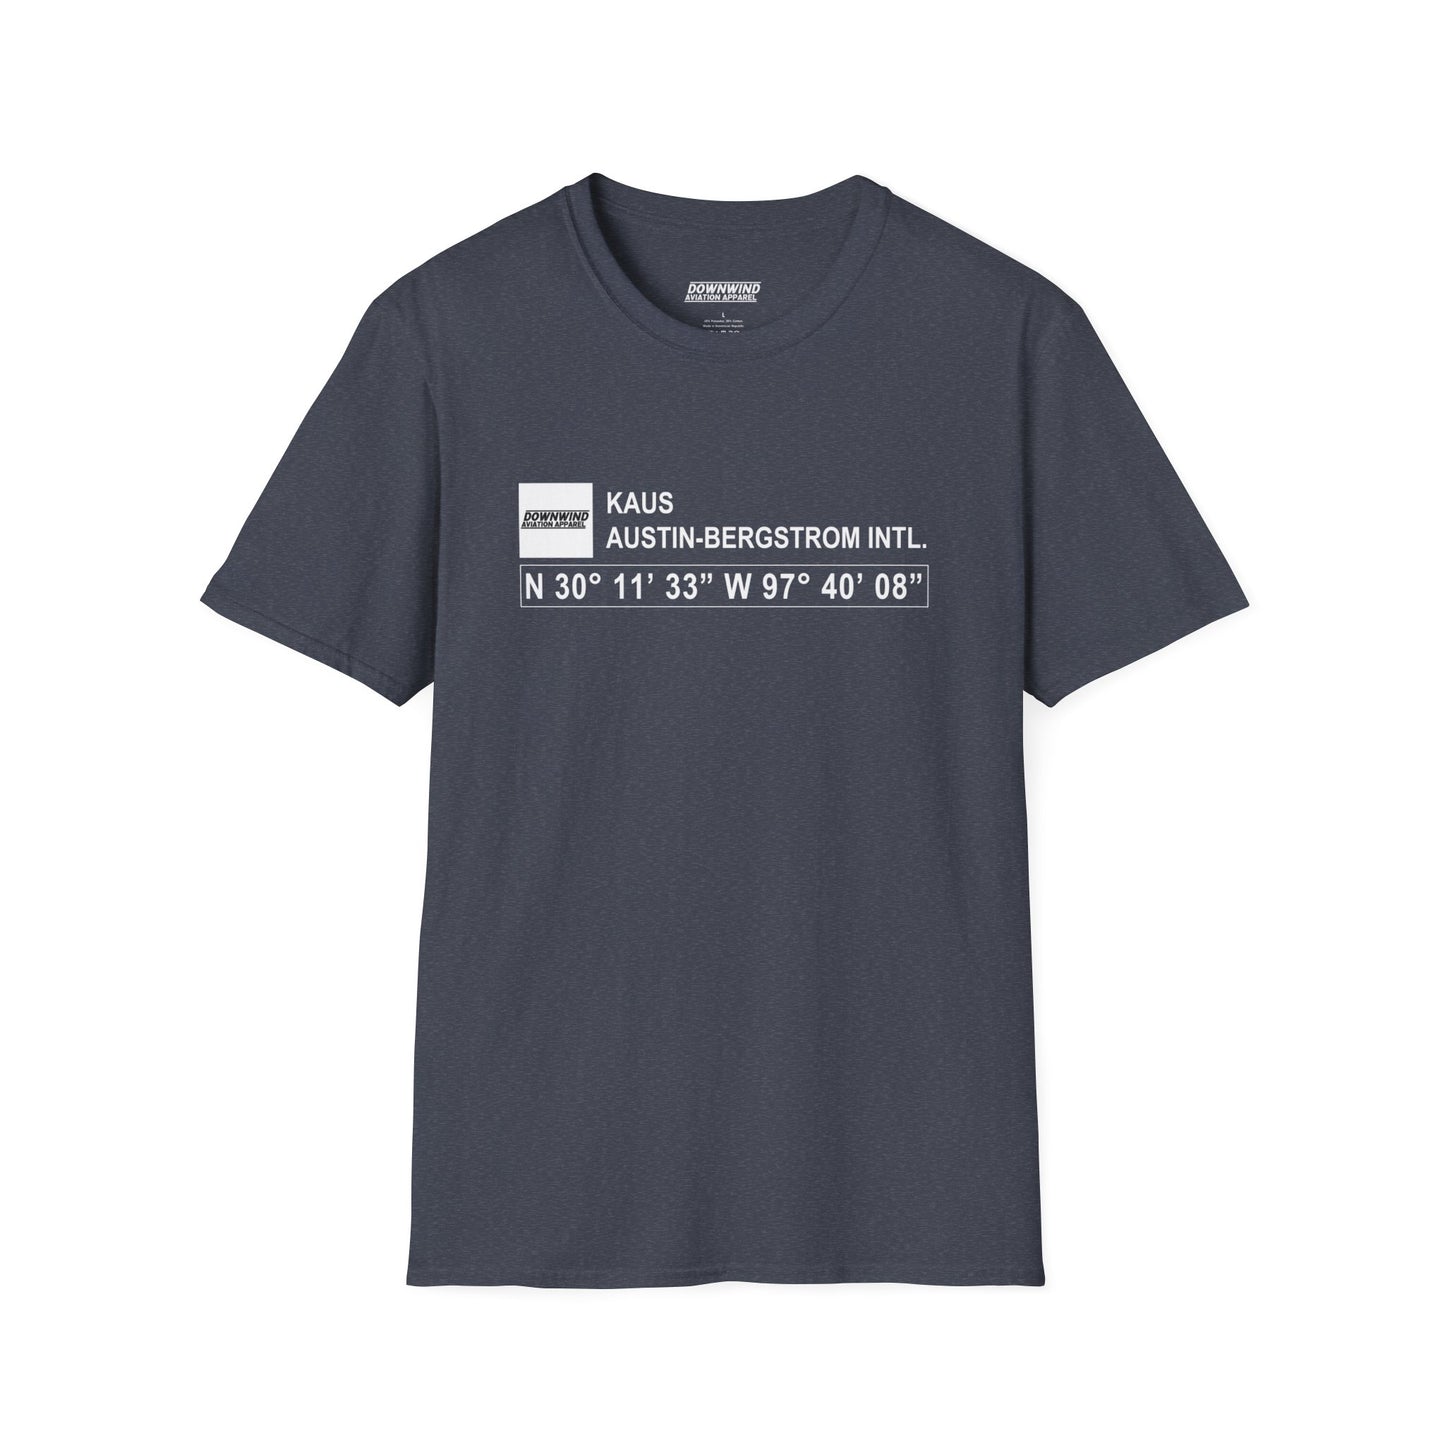 KAUS / Austin-Bergstrom Intl. T-Shirt